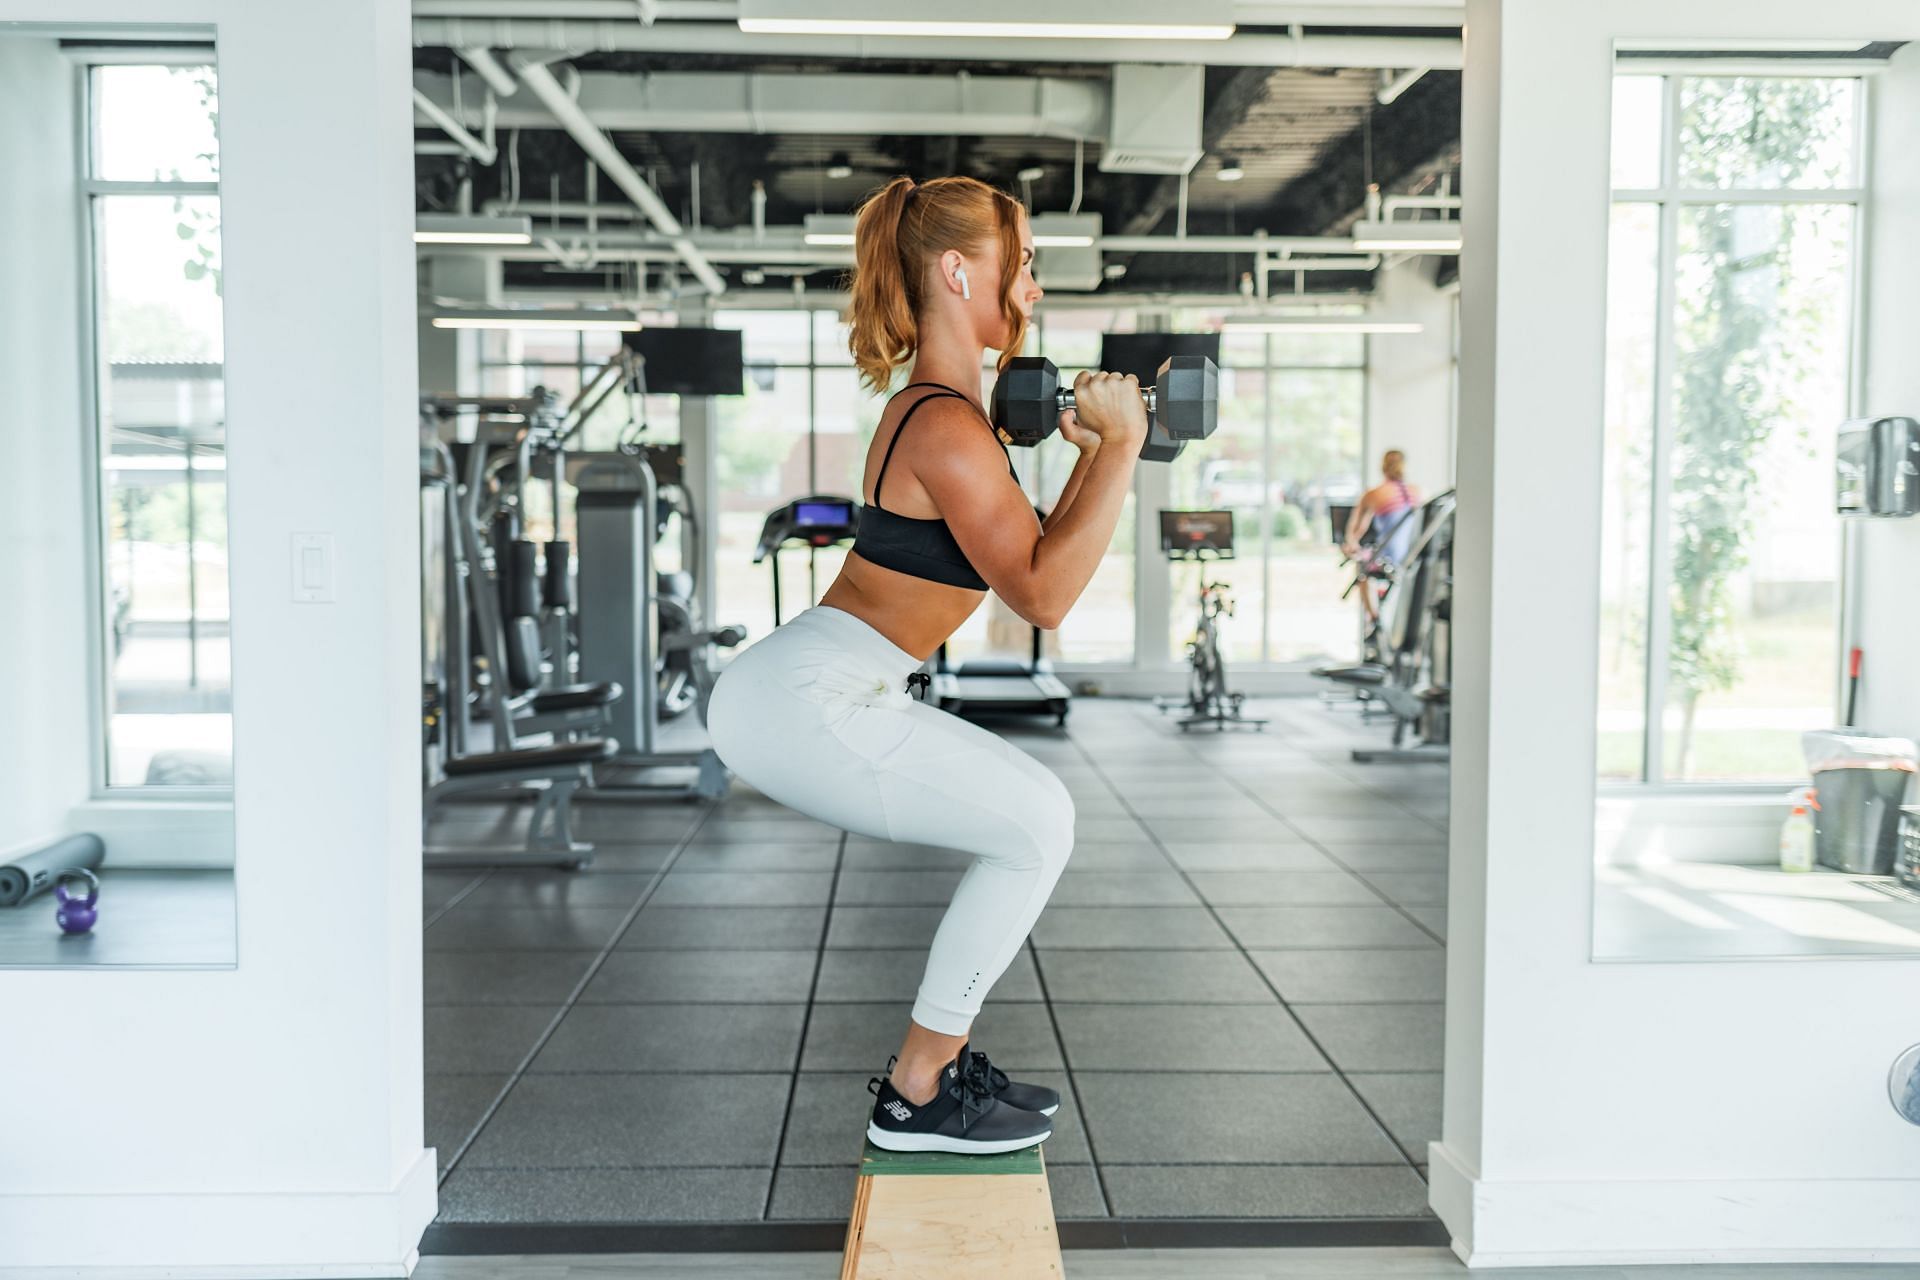 Exercises that women can do for bigger butt. (Image via Unsplash/ Benjamin Klaver)